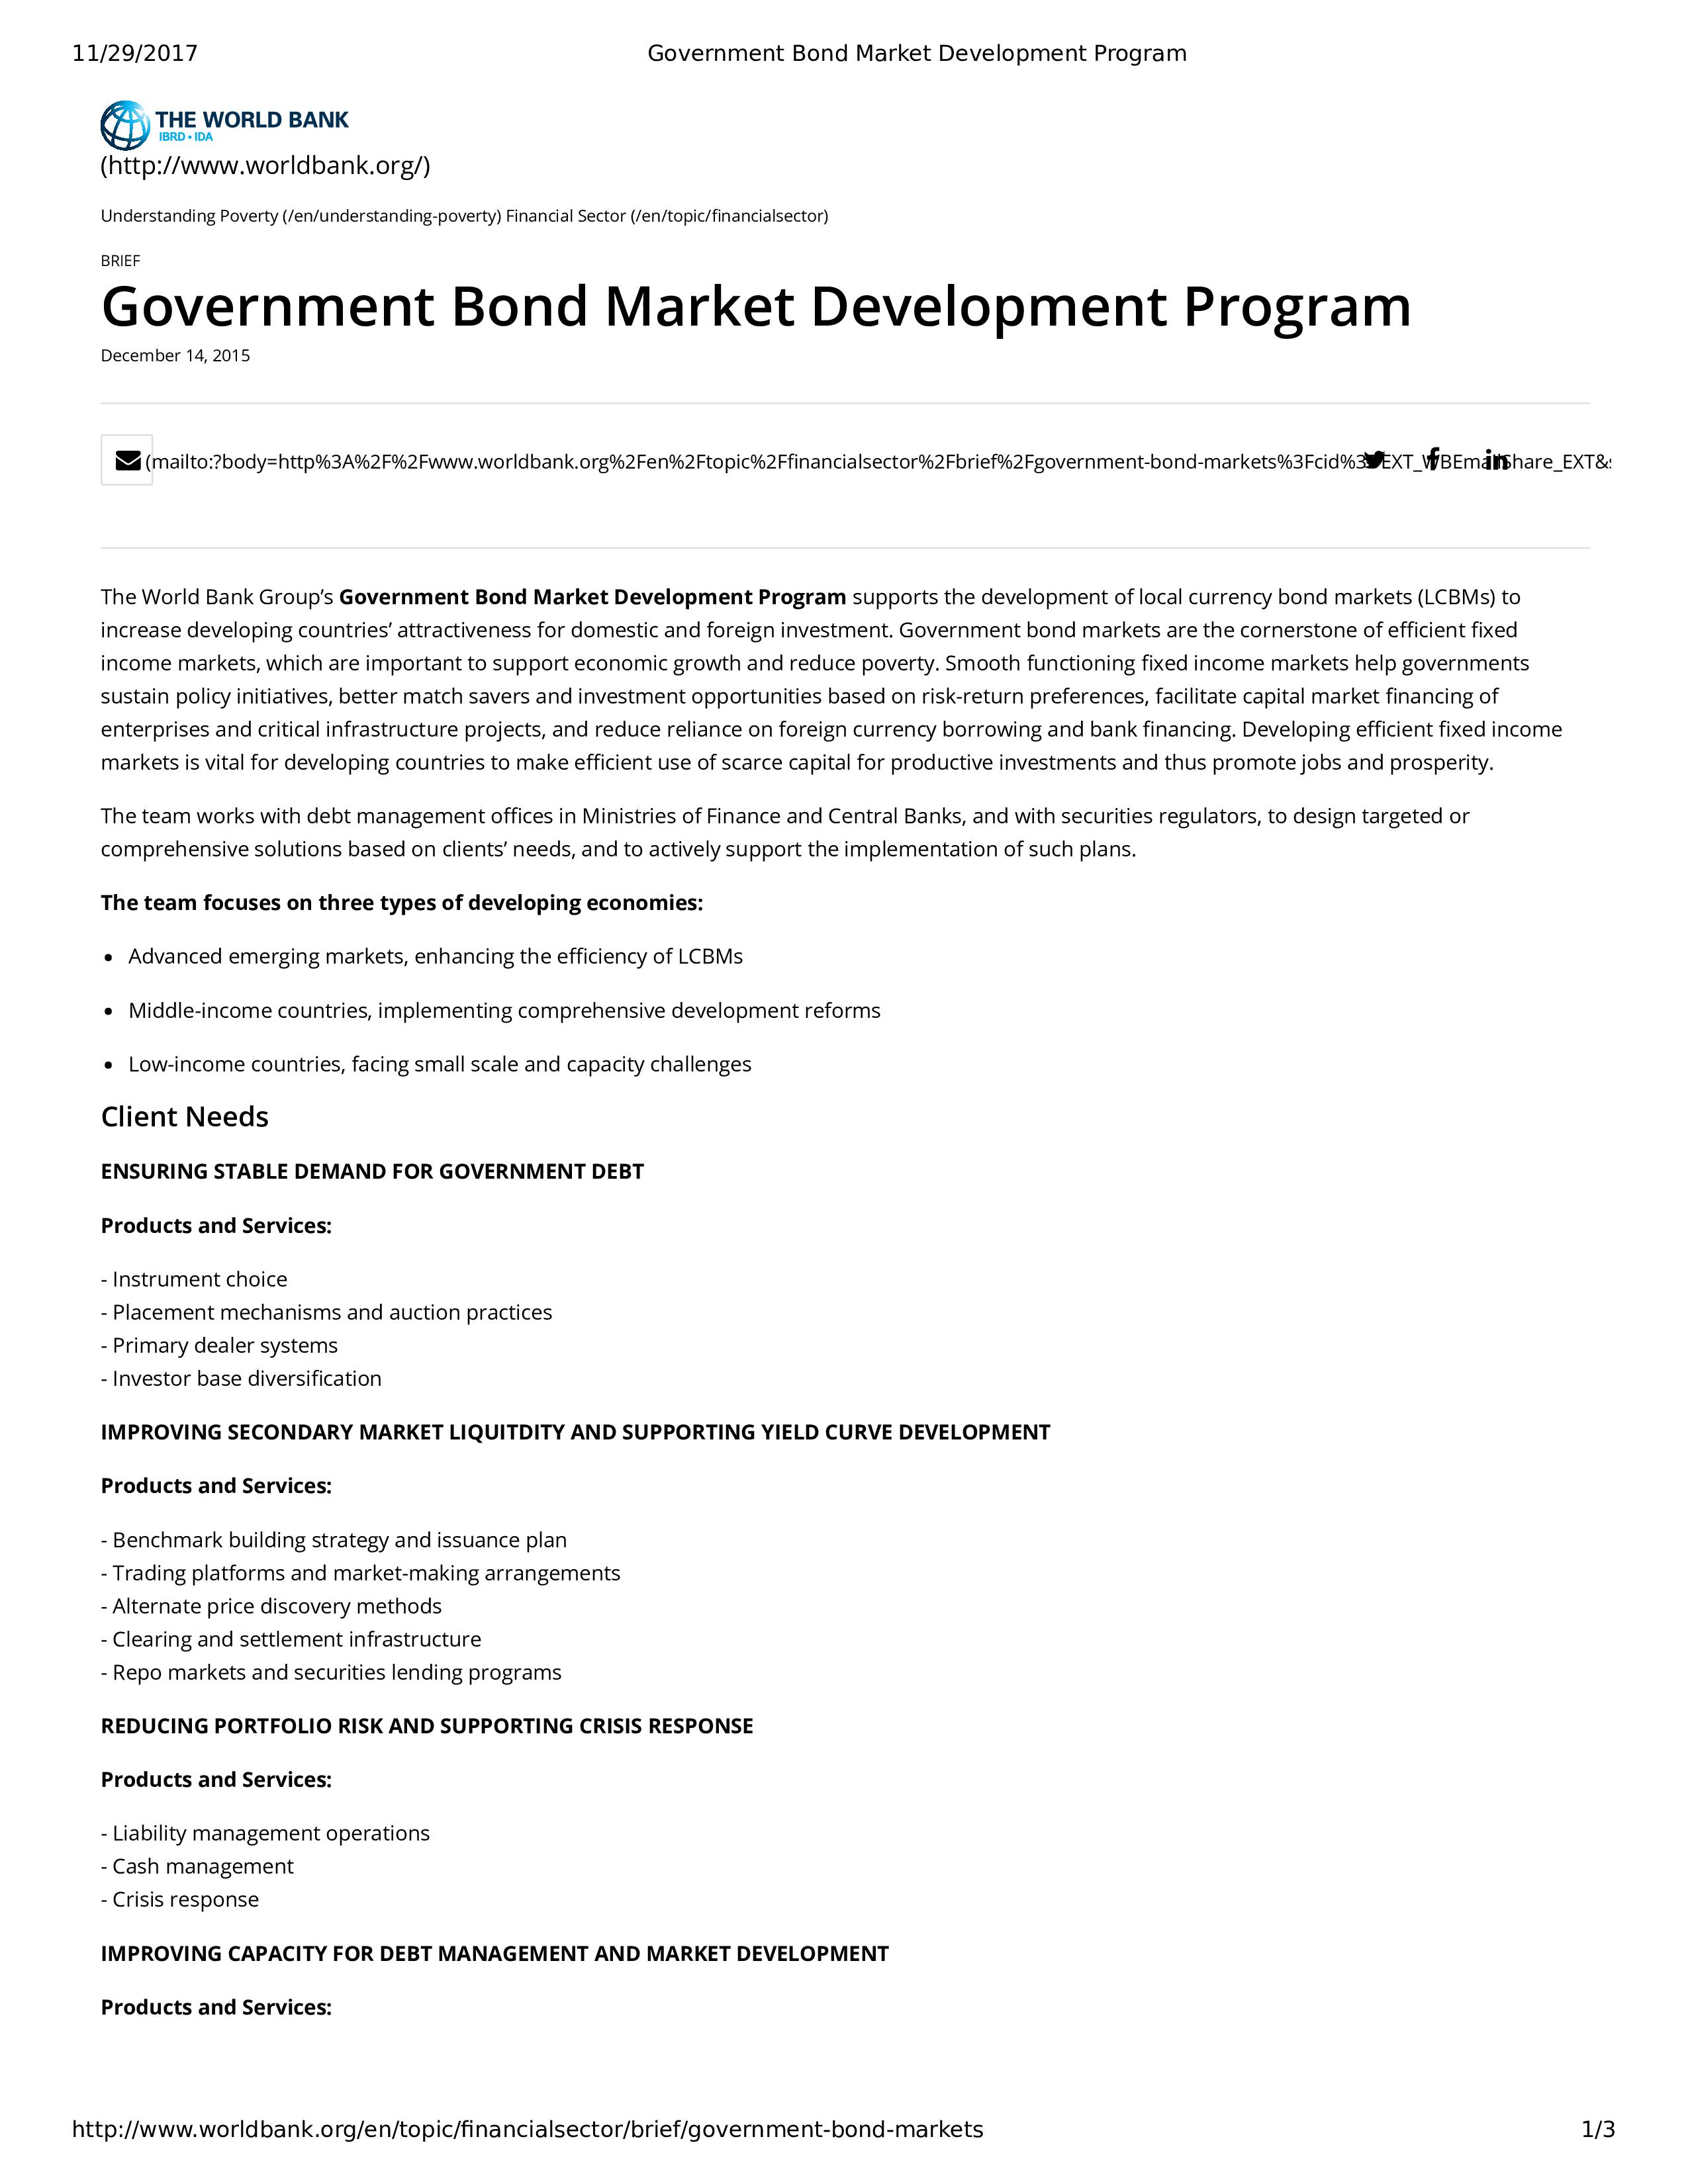 Government Bond Market Development Program main image